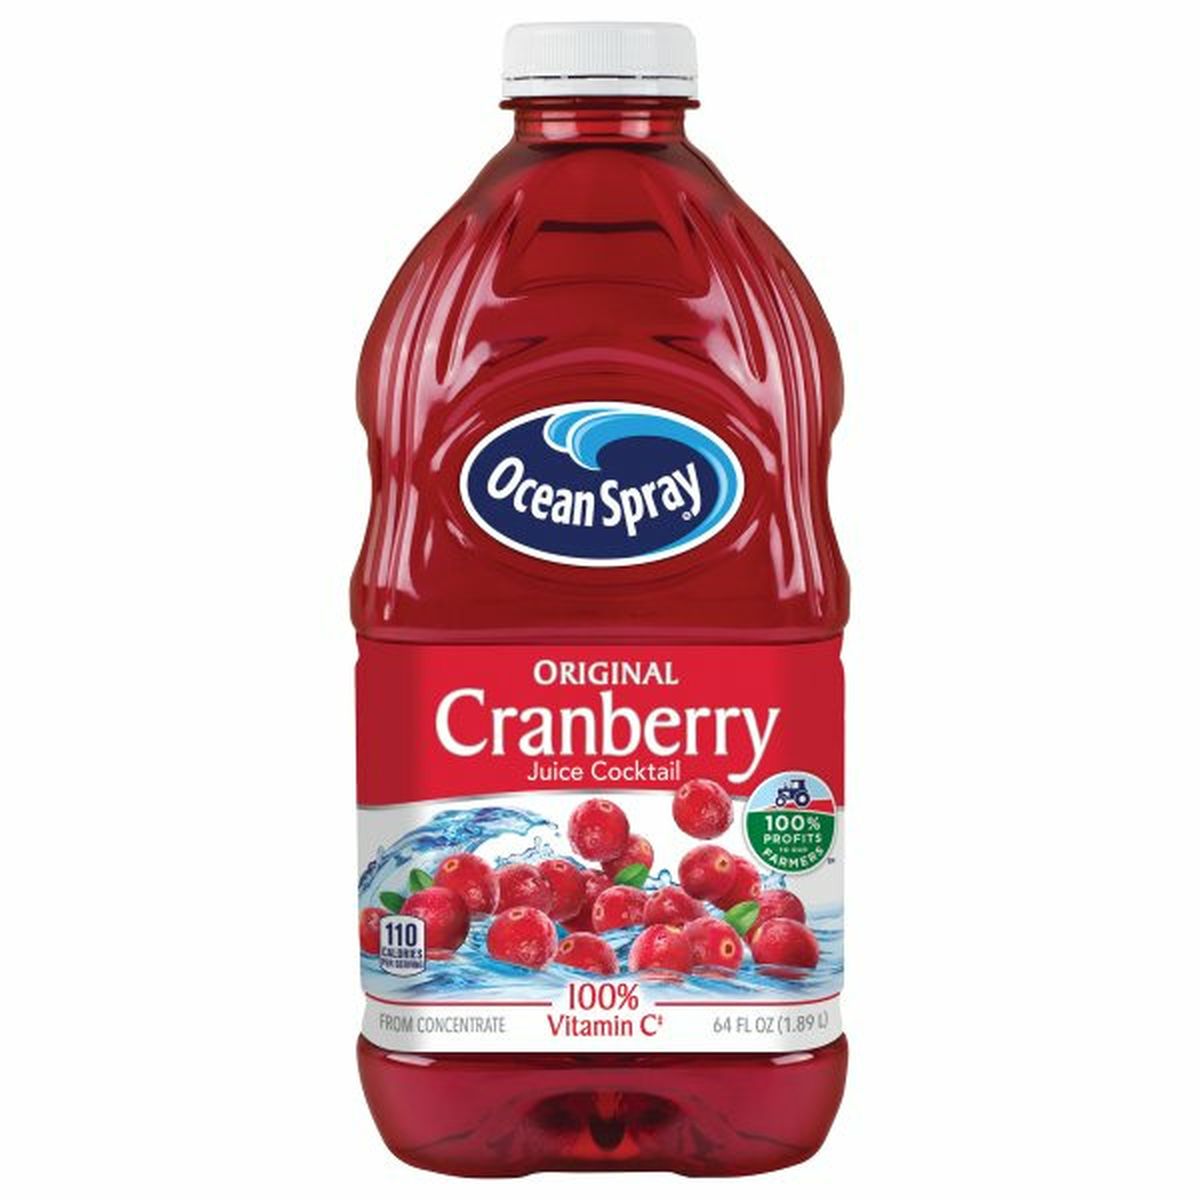 Calories in Ocean Spray Juice Cocktail, Cranberry, Original